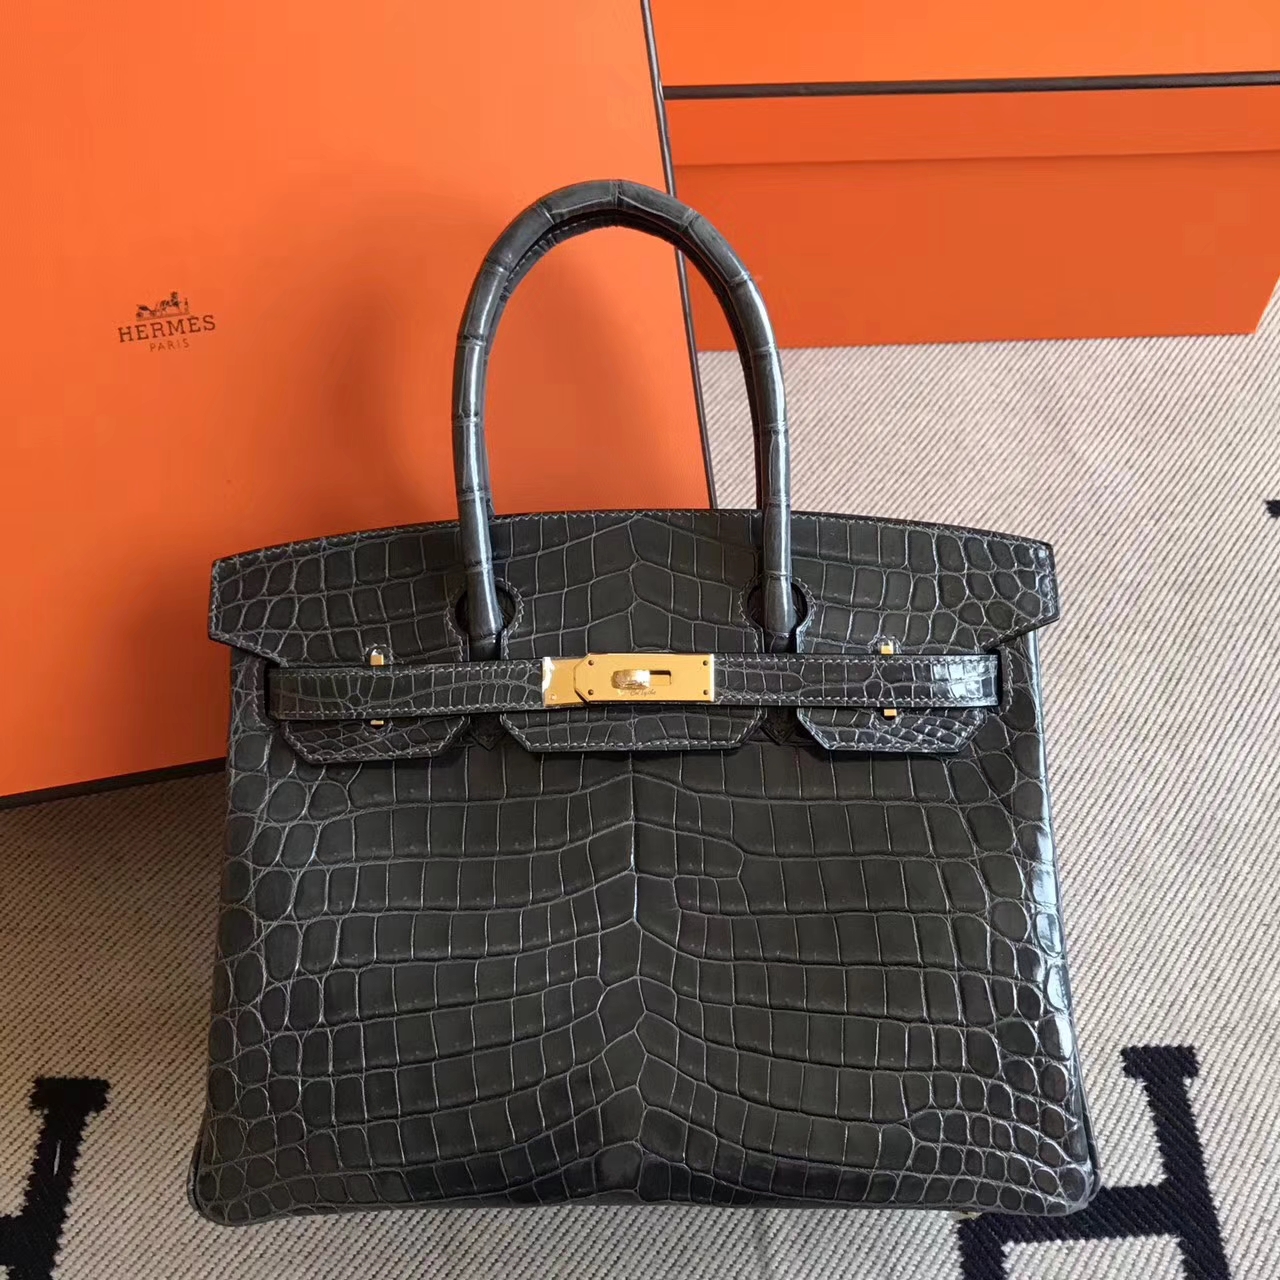 On Sale Hermes Birkin30cm Handbag in Ck88 Graphite Grey Crocodile Shiny ...